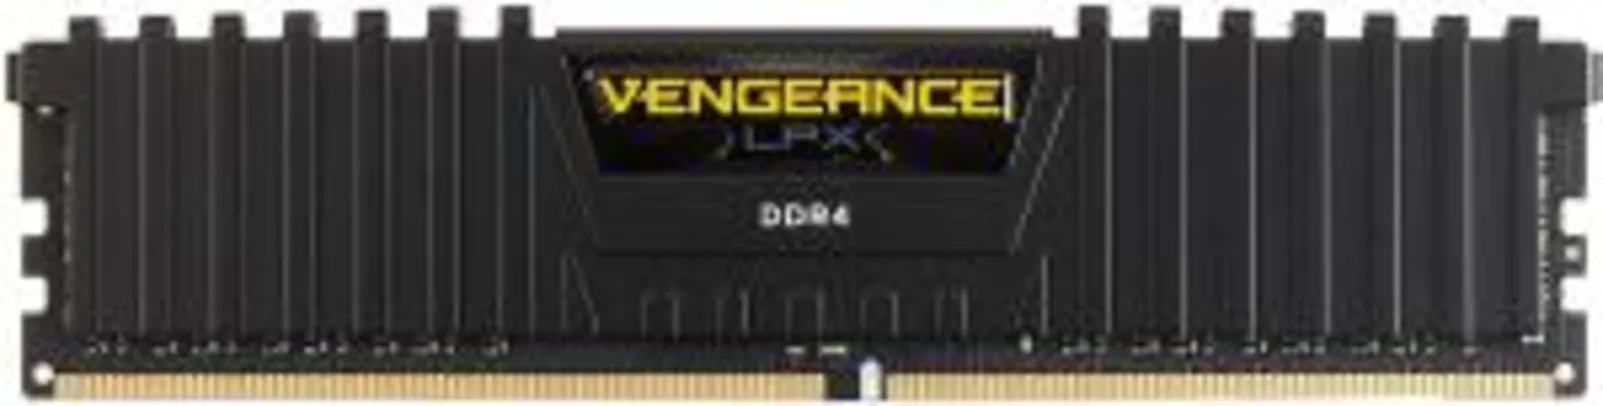 MEMÓRIA DDR4 CORSAIR VENGEANCE LPX 8GB 3000MHZ CMK8GX4M1D3000C16